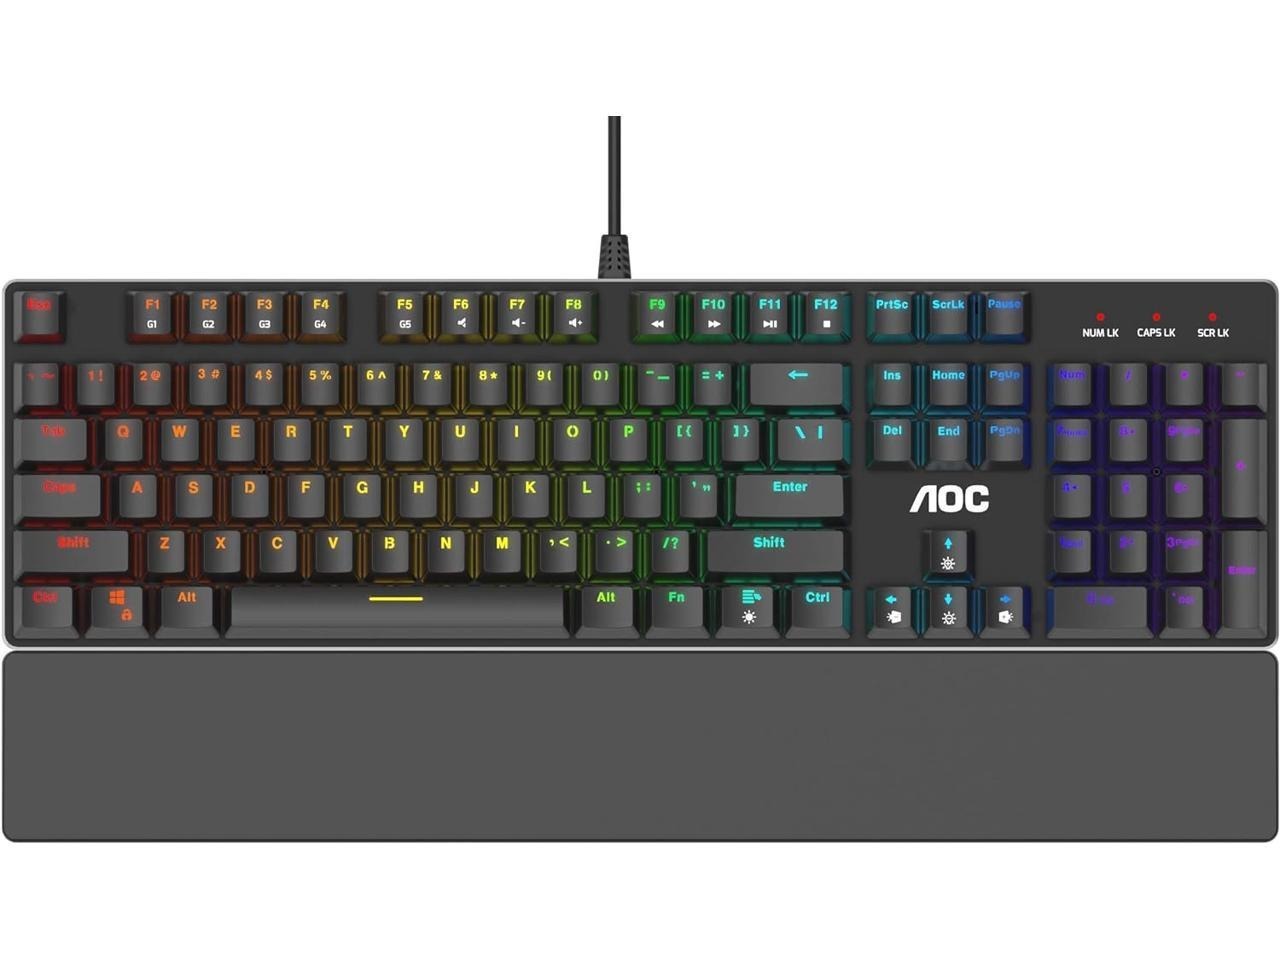 AOC Gaming Full RGB Mechanical Keyboard (Outemu Blue Switches) $20 + Free Shipping